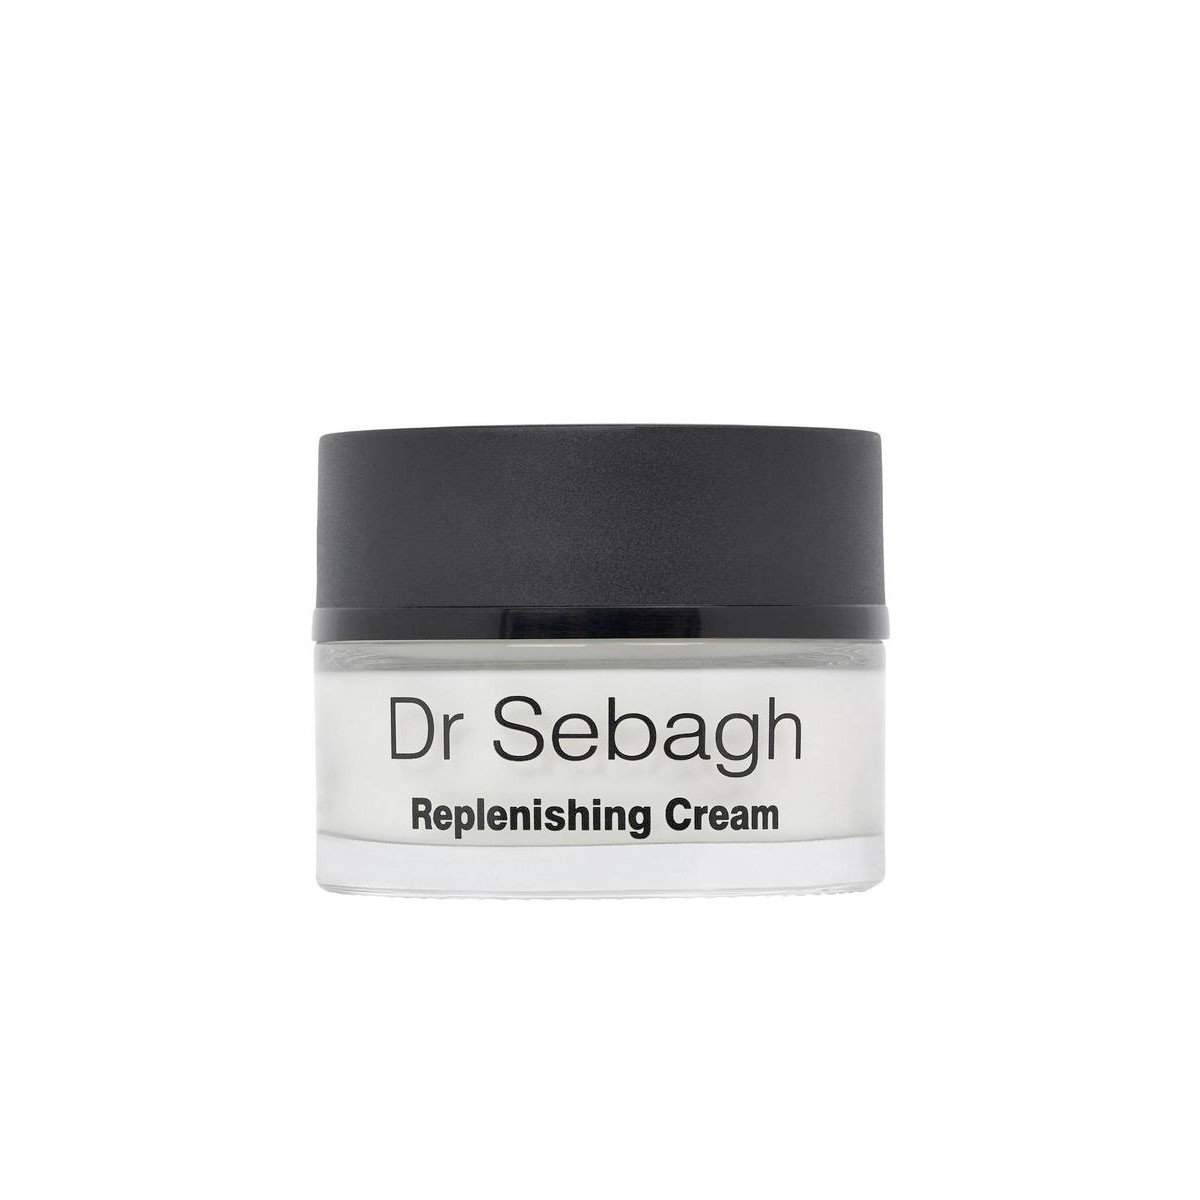 Dr Sebagh Replenishing Cream 2 oz